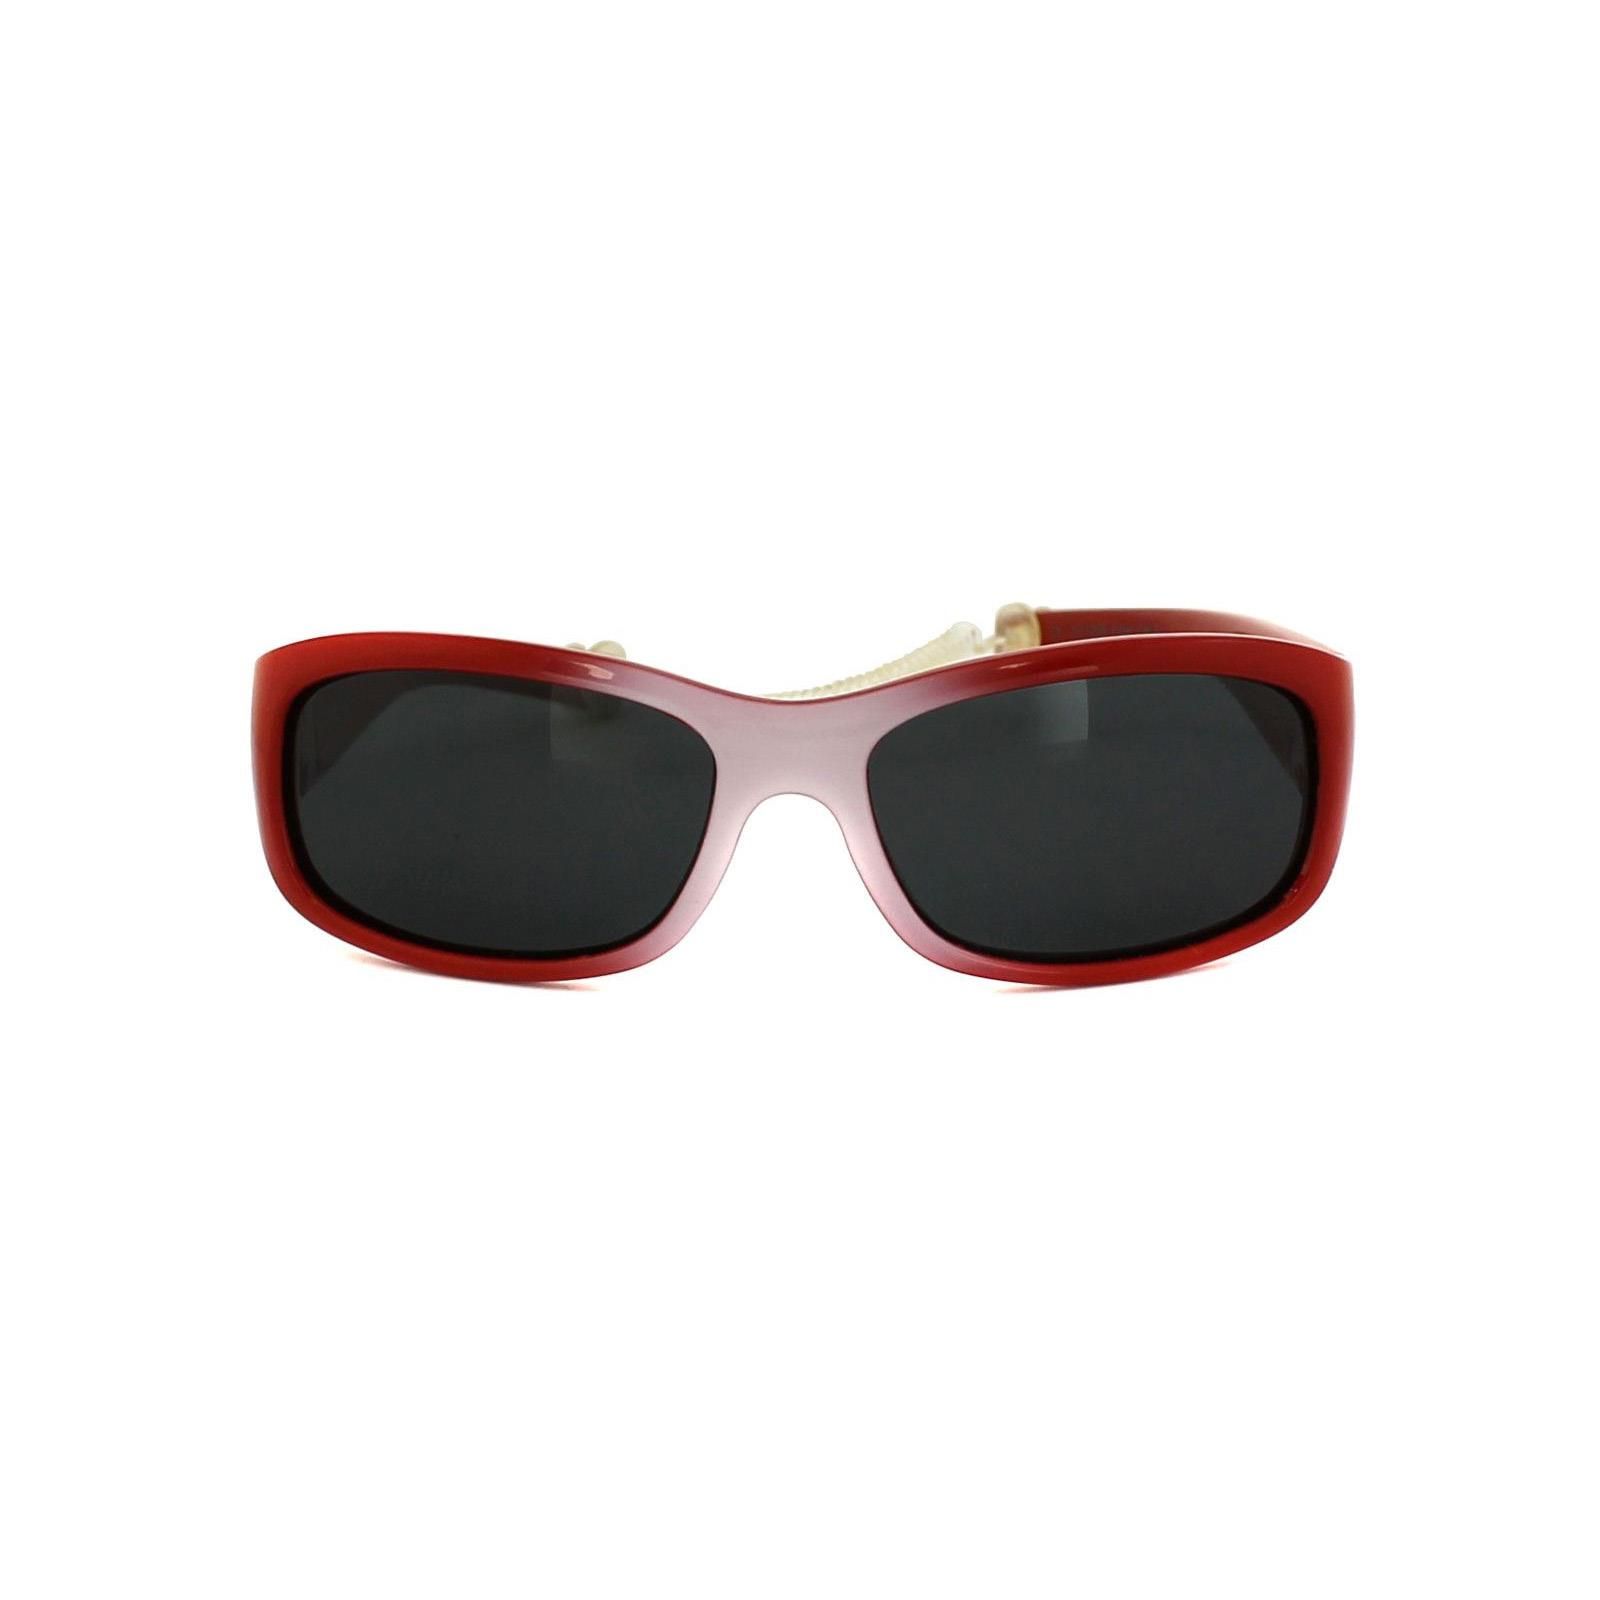 Disney Sunglasses Mickey Mouse D0105 B Red White Black Polarized